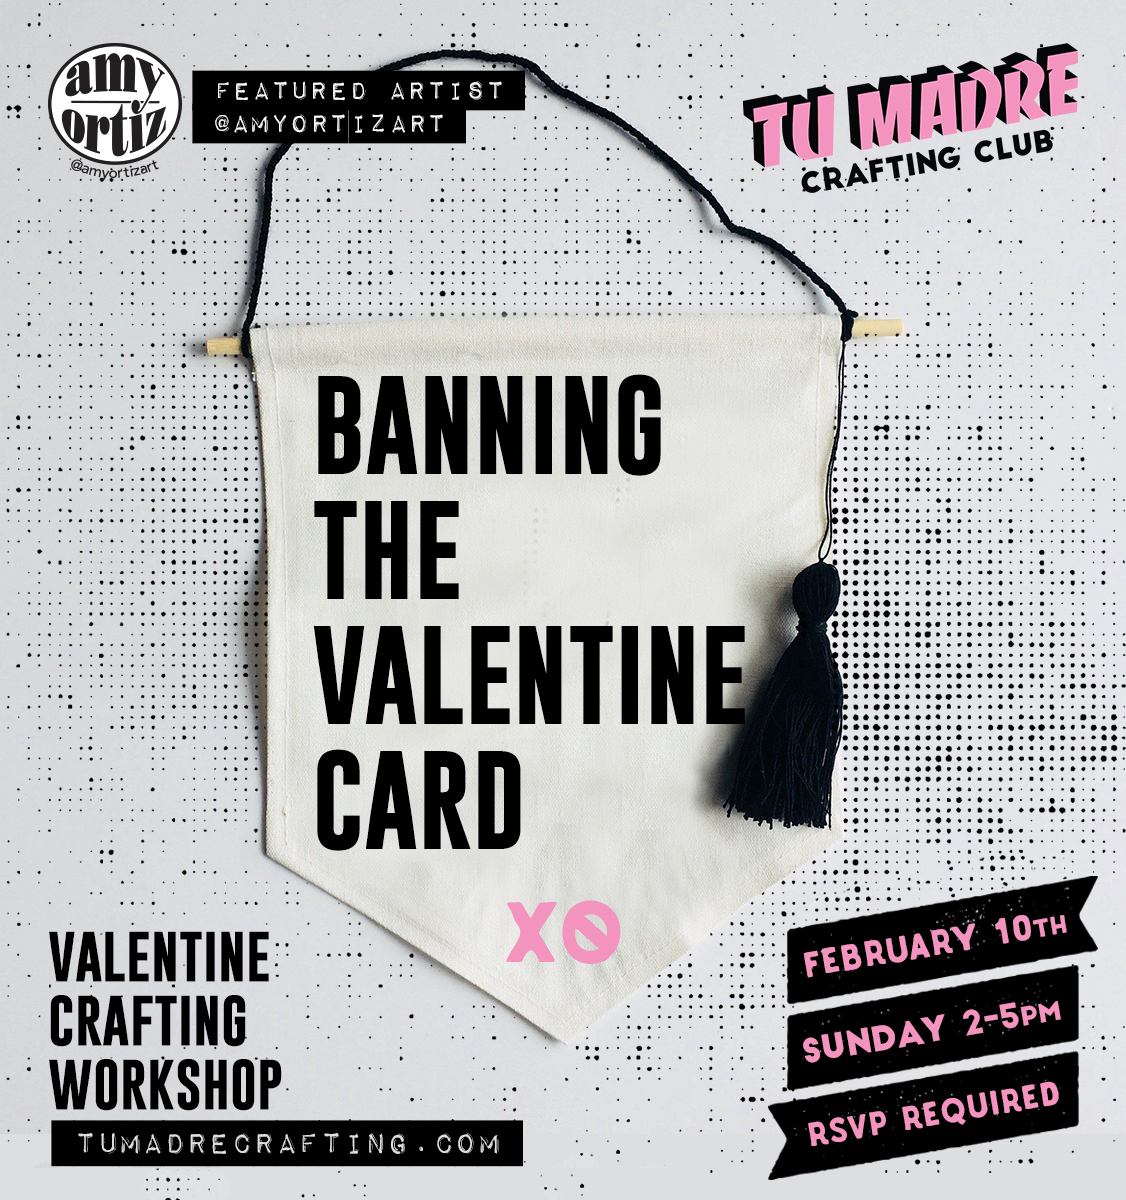 Banning the Valentine Card-Tu Madre-workshop.jpg